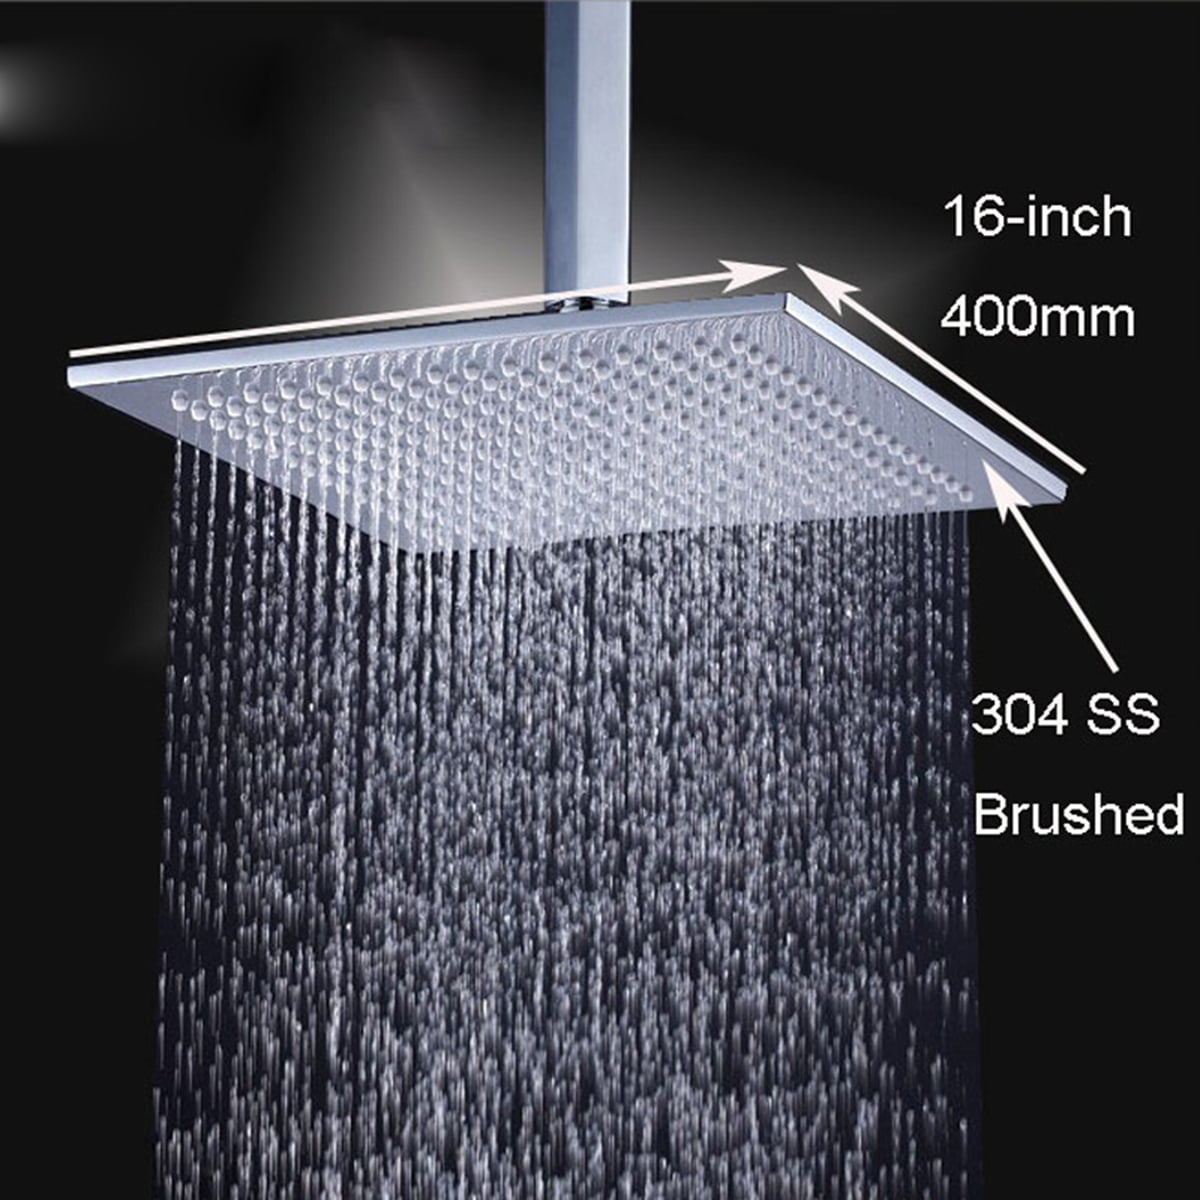 8'' Square Stainless Steel Rain Shower Head Chrome Bathroom Top Sprayer Faucet